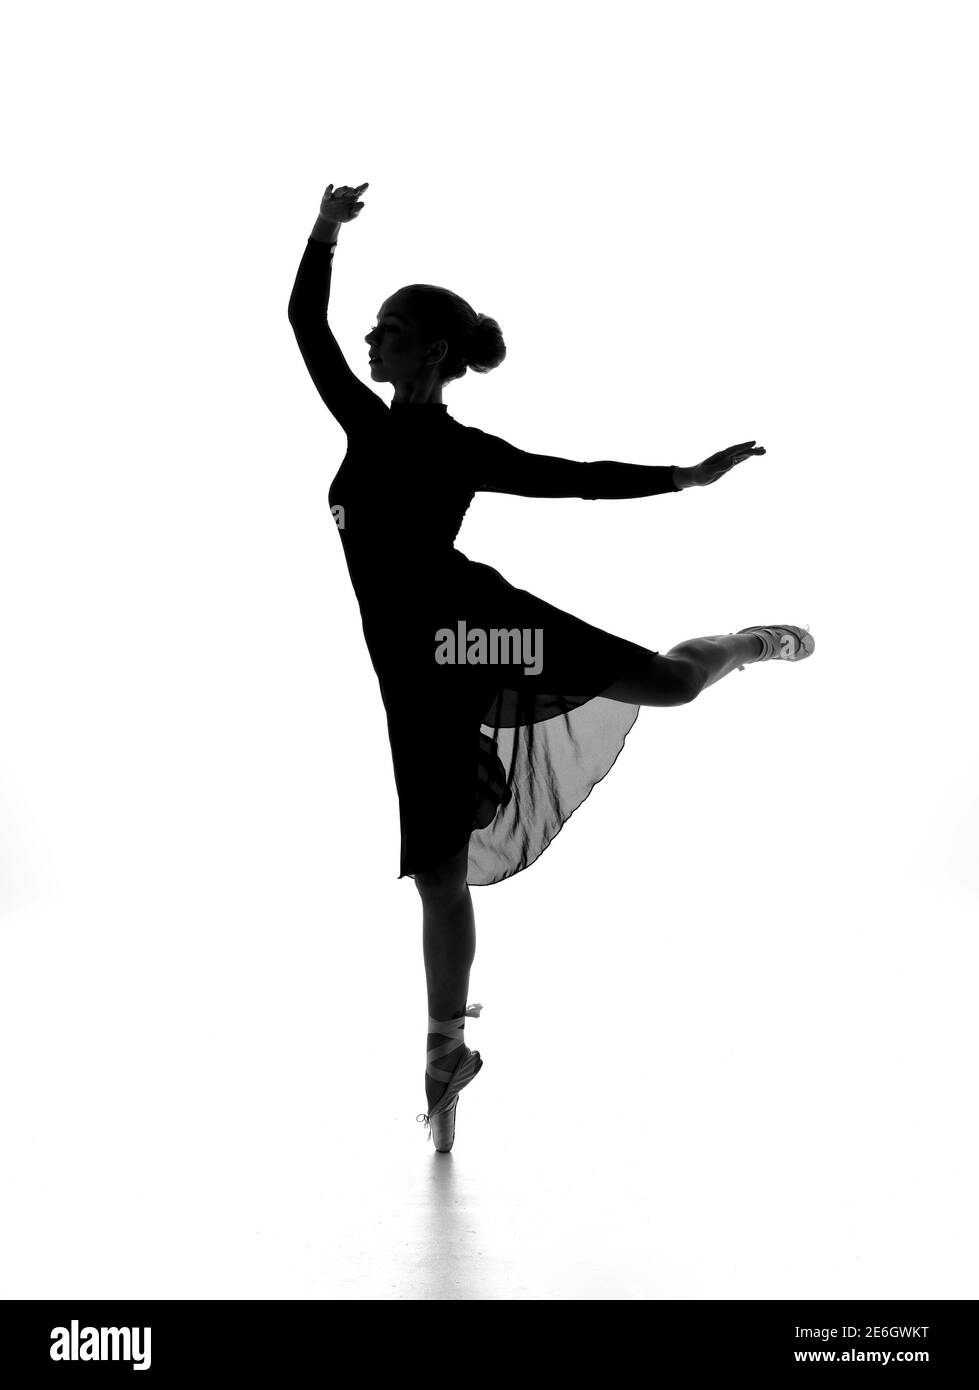 Ballet dancer in silhouette Stock Photo